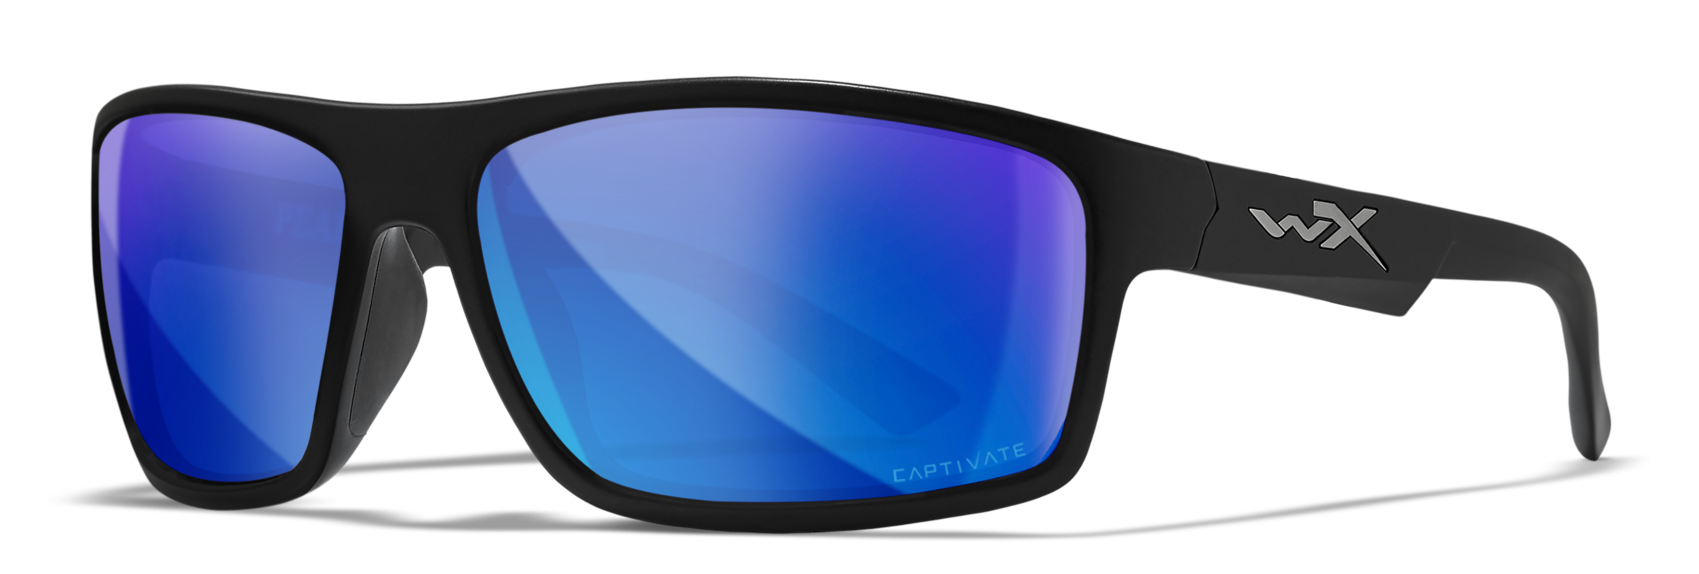 Wiley X WX Peak Blue Polycarbonate Sunglasses